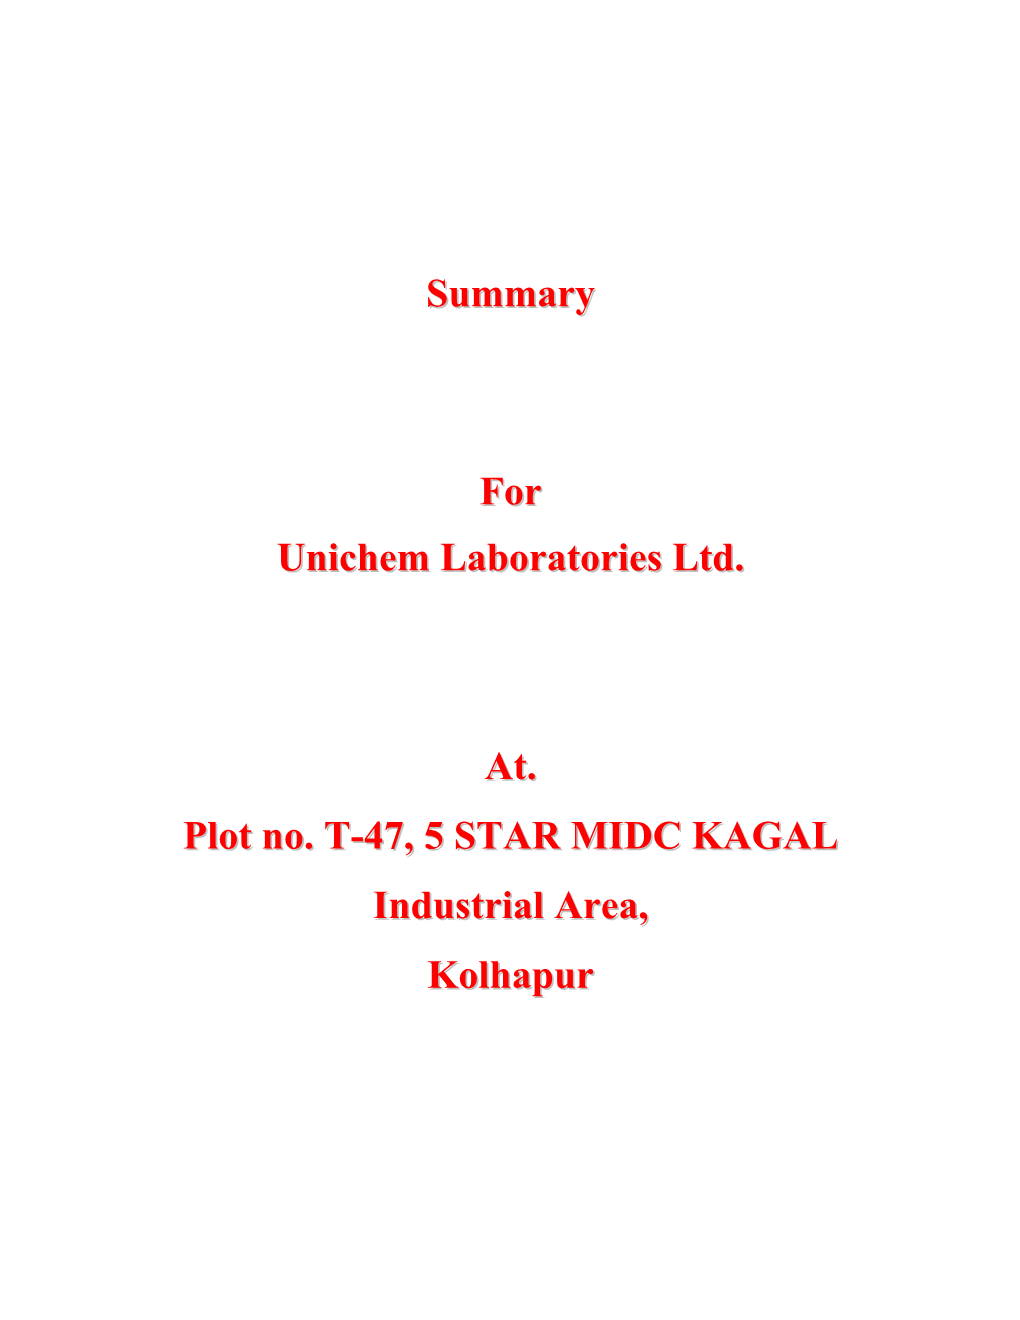 Summary for Unichem Laboratories Ltd .. At. Plot No. T-47, 5 STAR